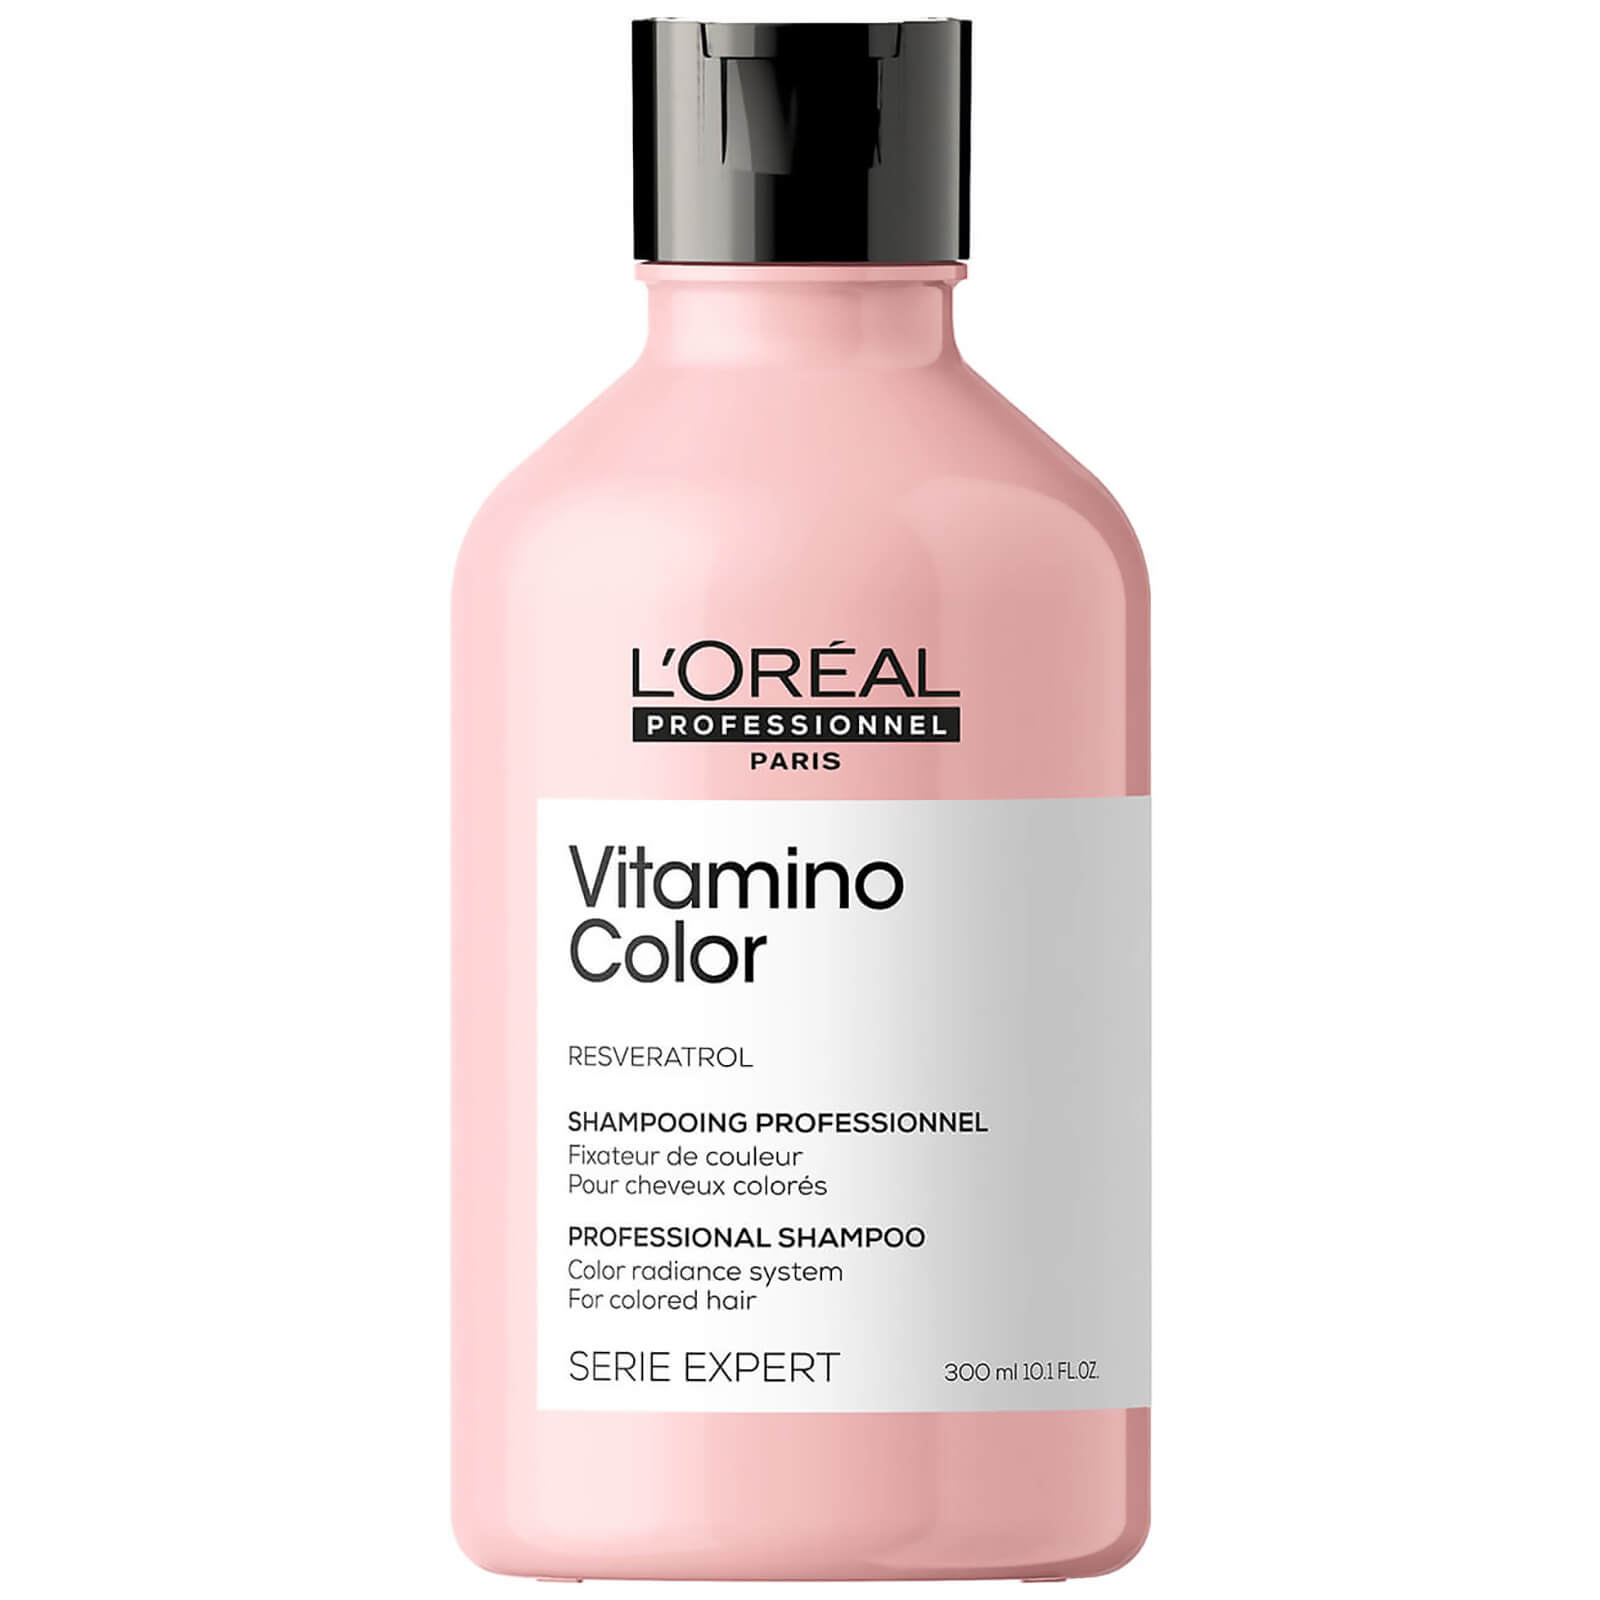 Champú Vitamino Color de la serie Expert de L'Oréal Professionnel (300 ml)